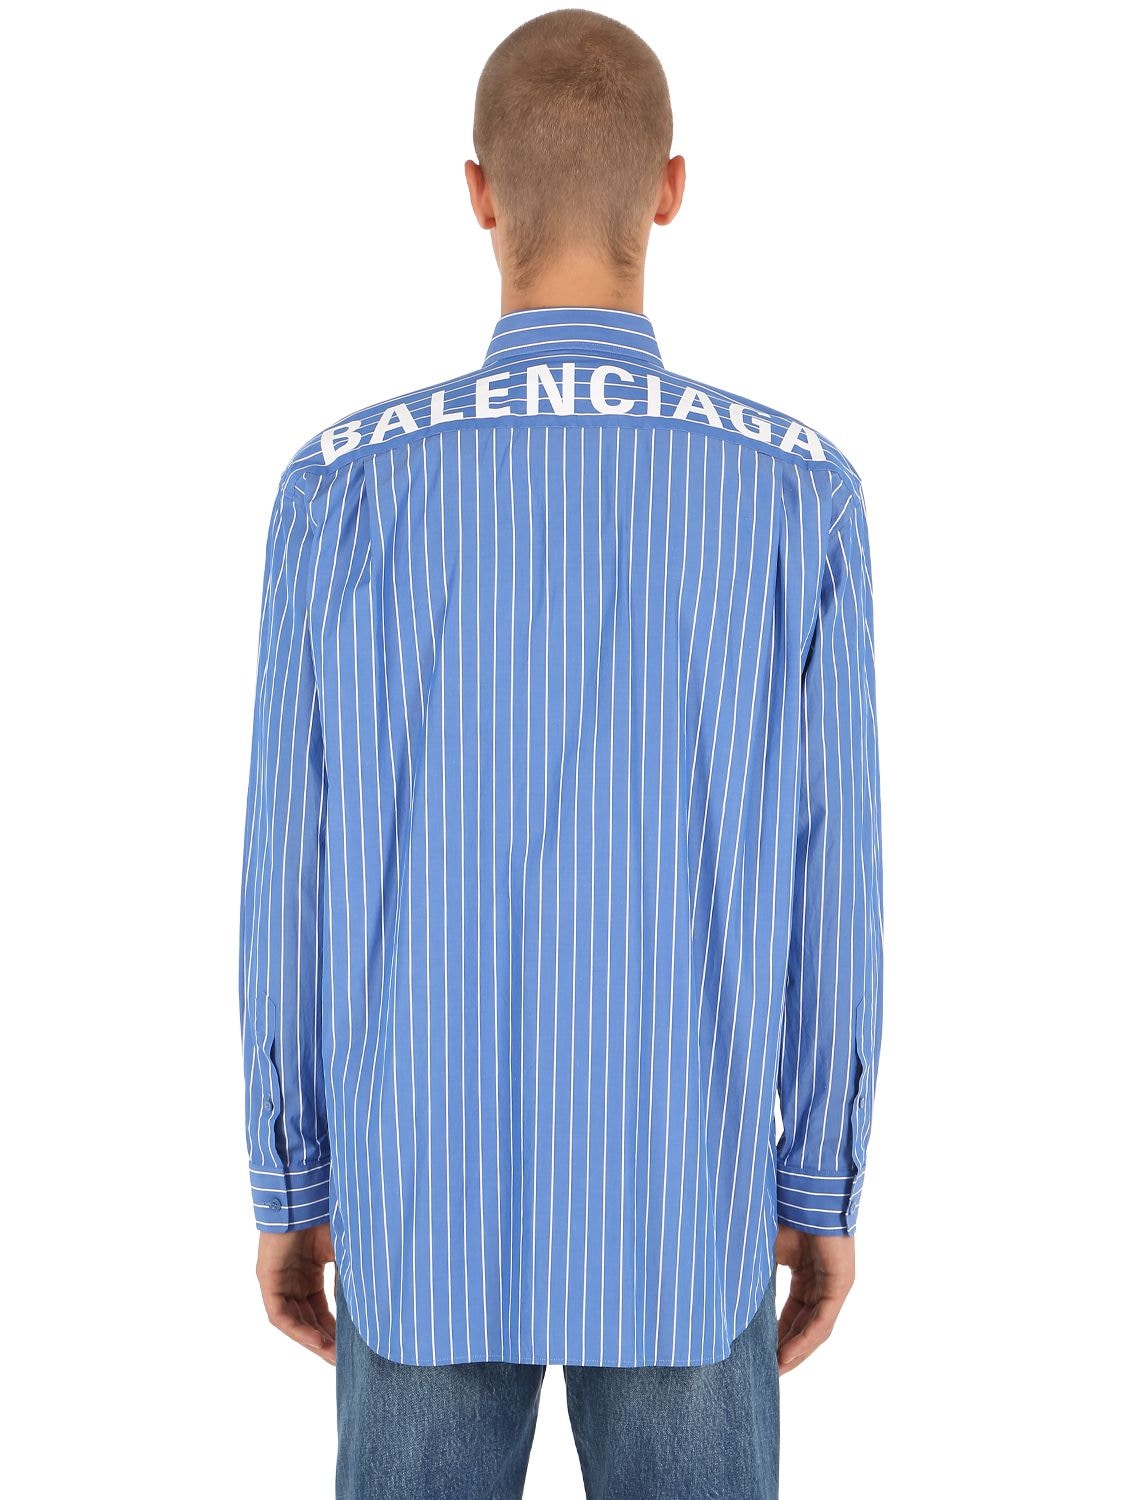 Balenciaga Logo Printed Striped Cotton Shirt In Blue/white